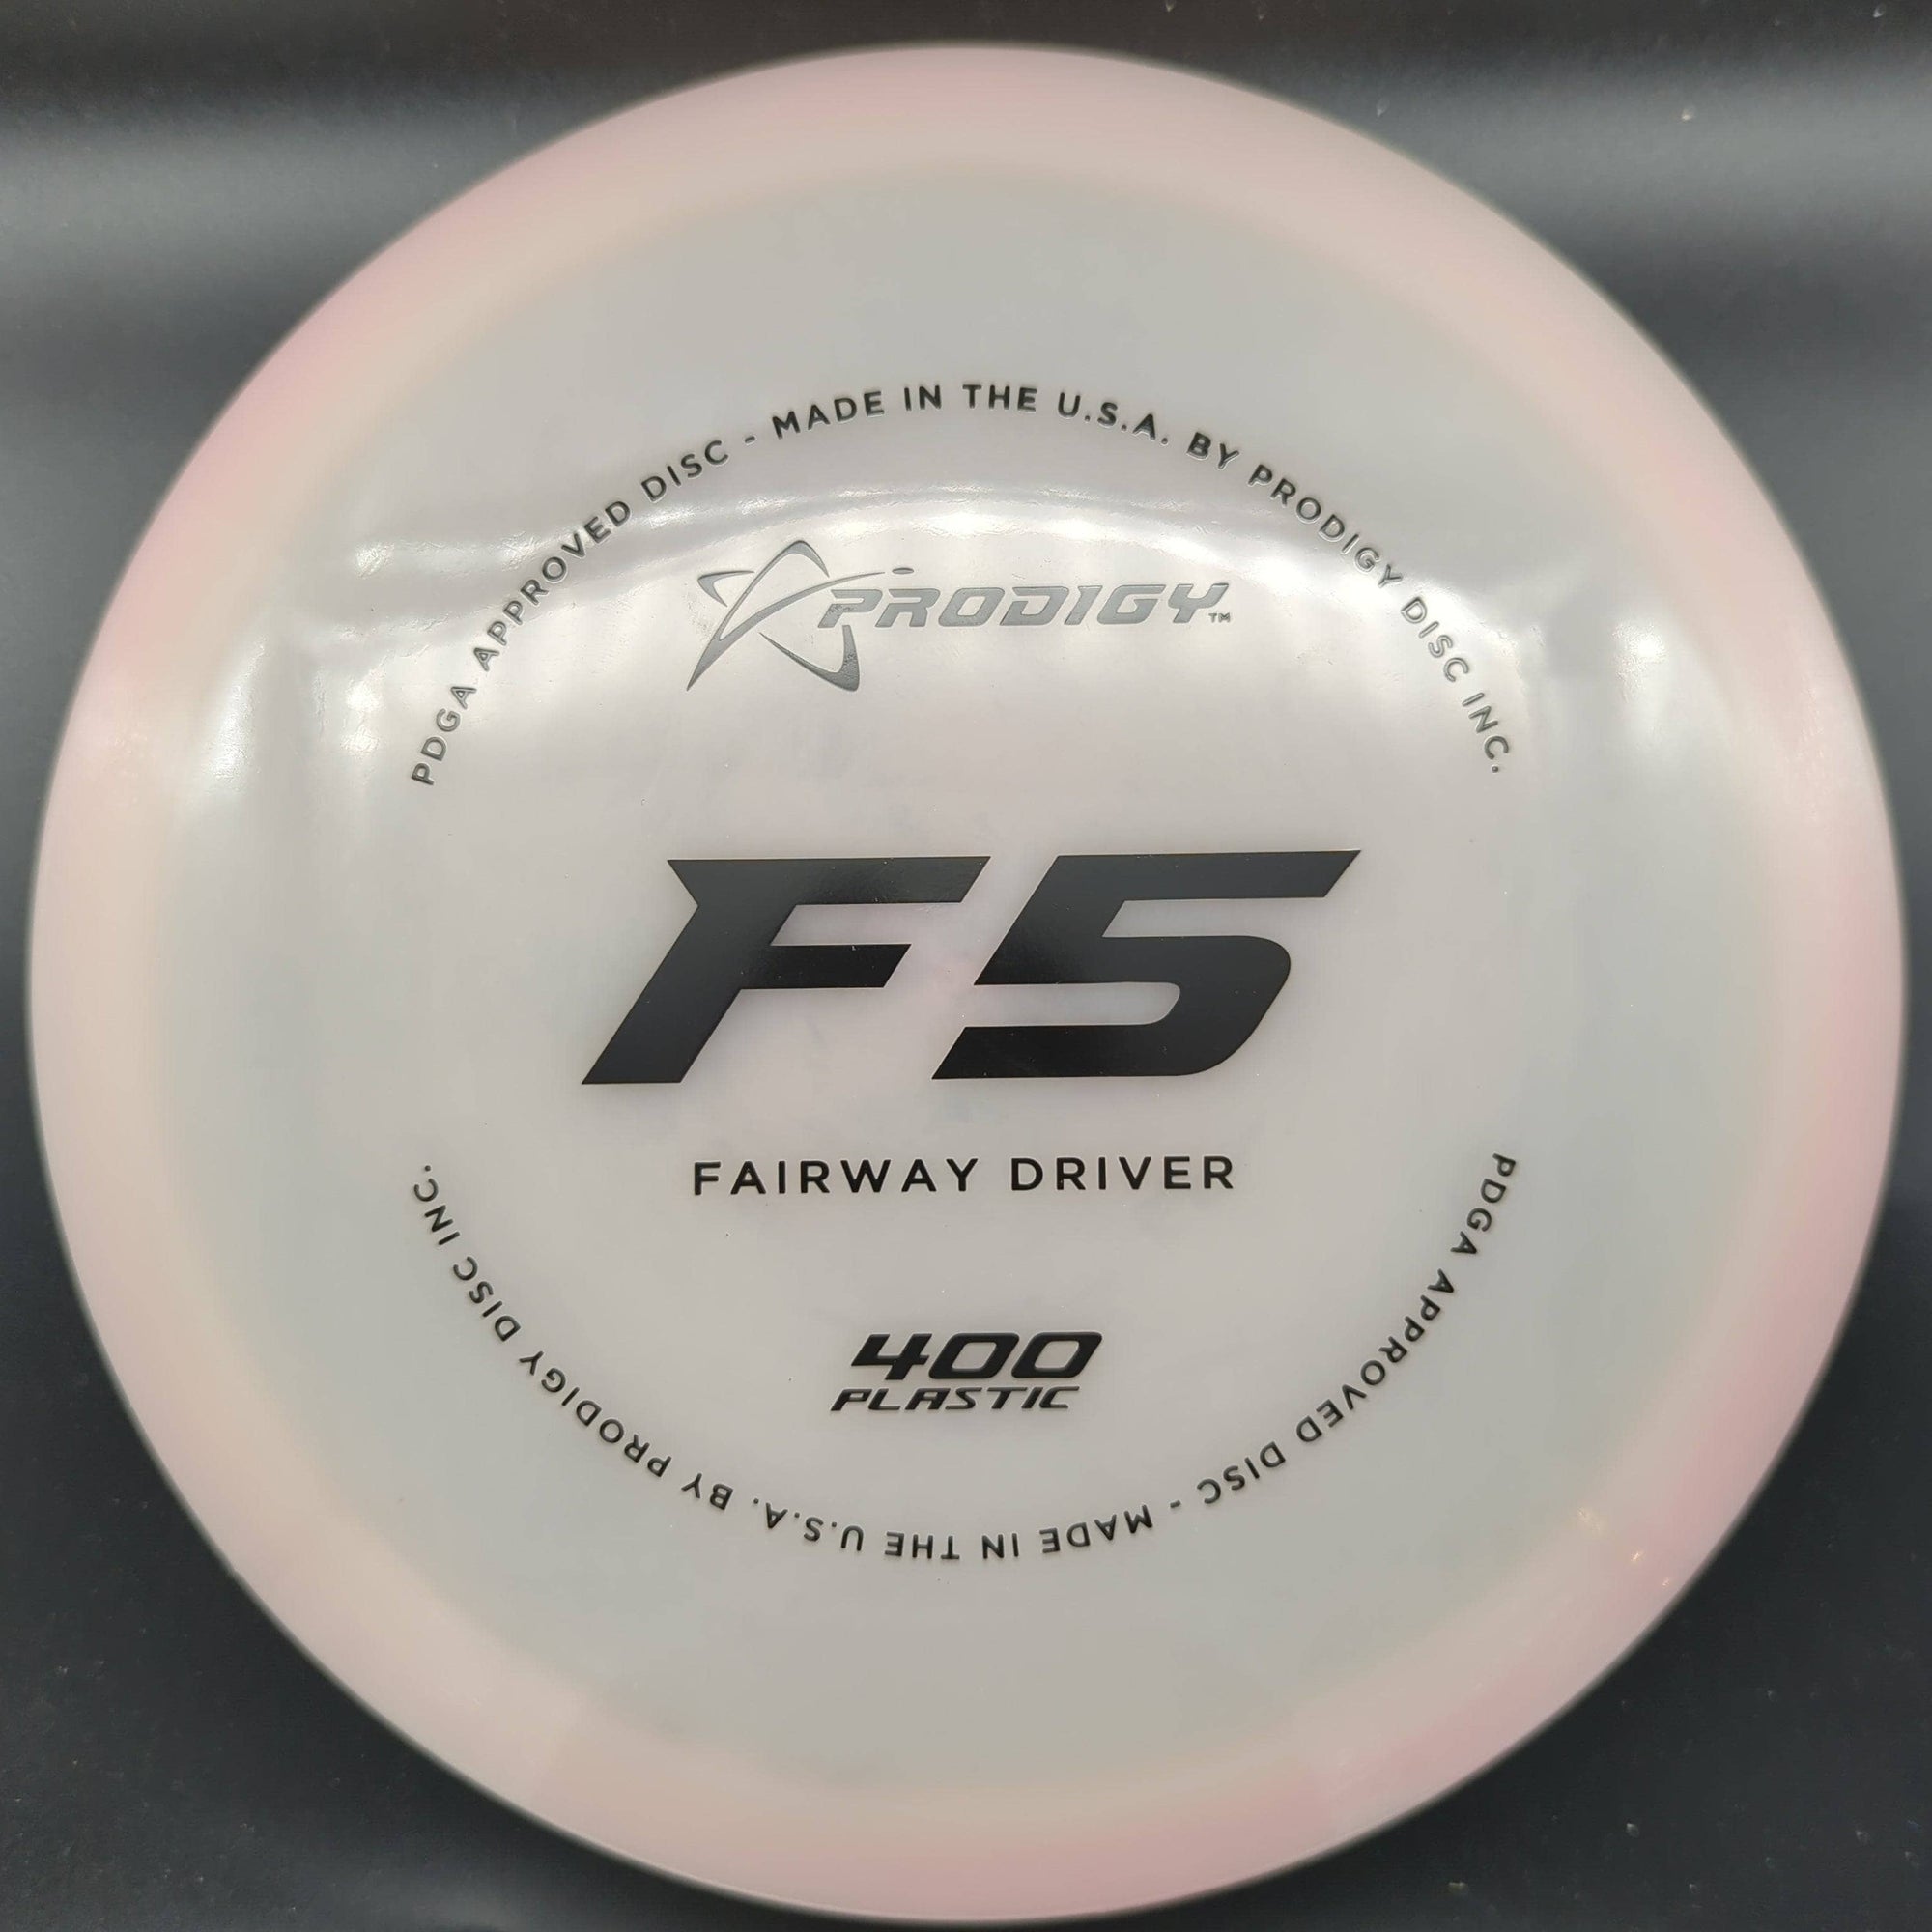 Prodigy Fairway Driver F5 - 400 plastic